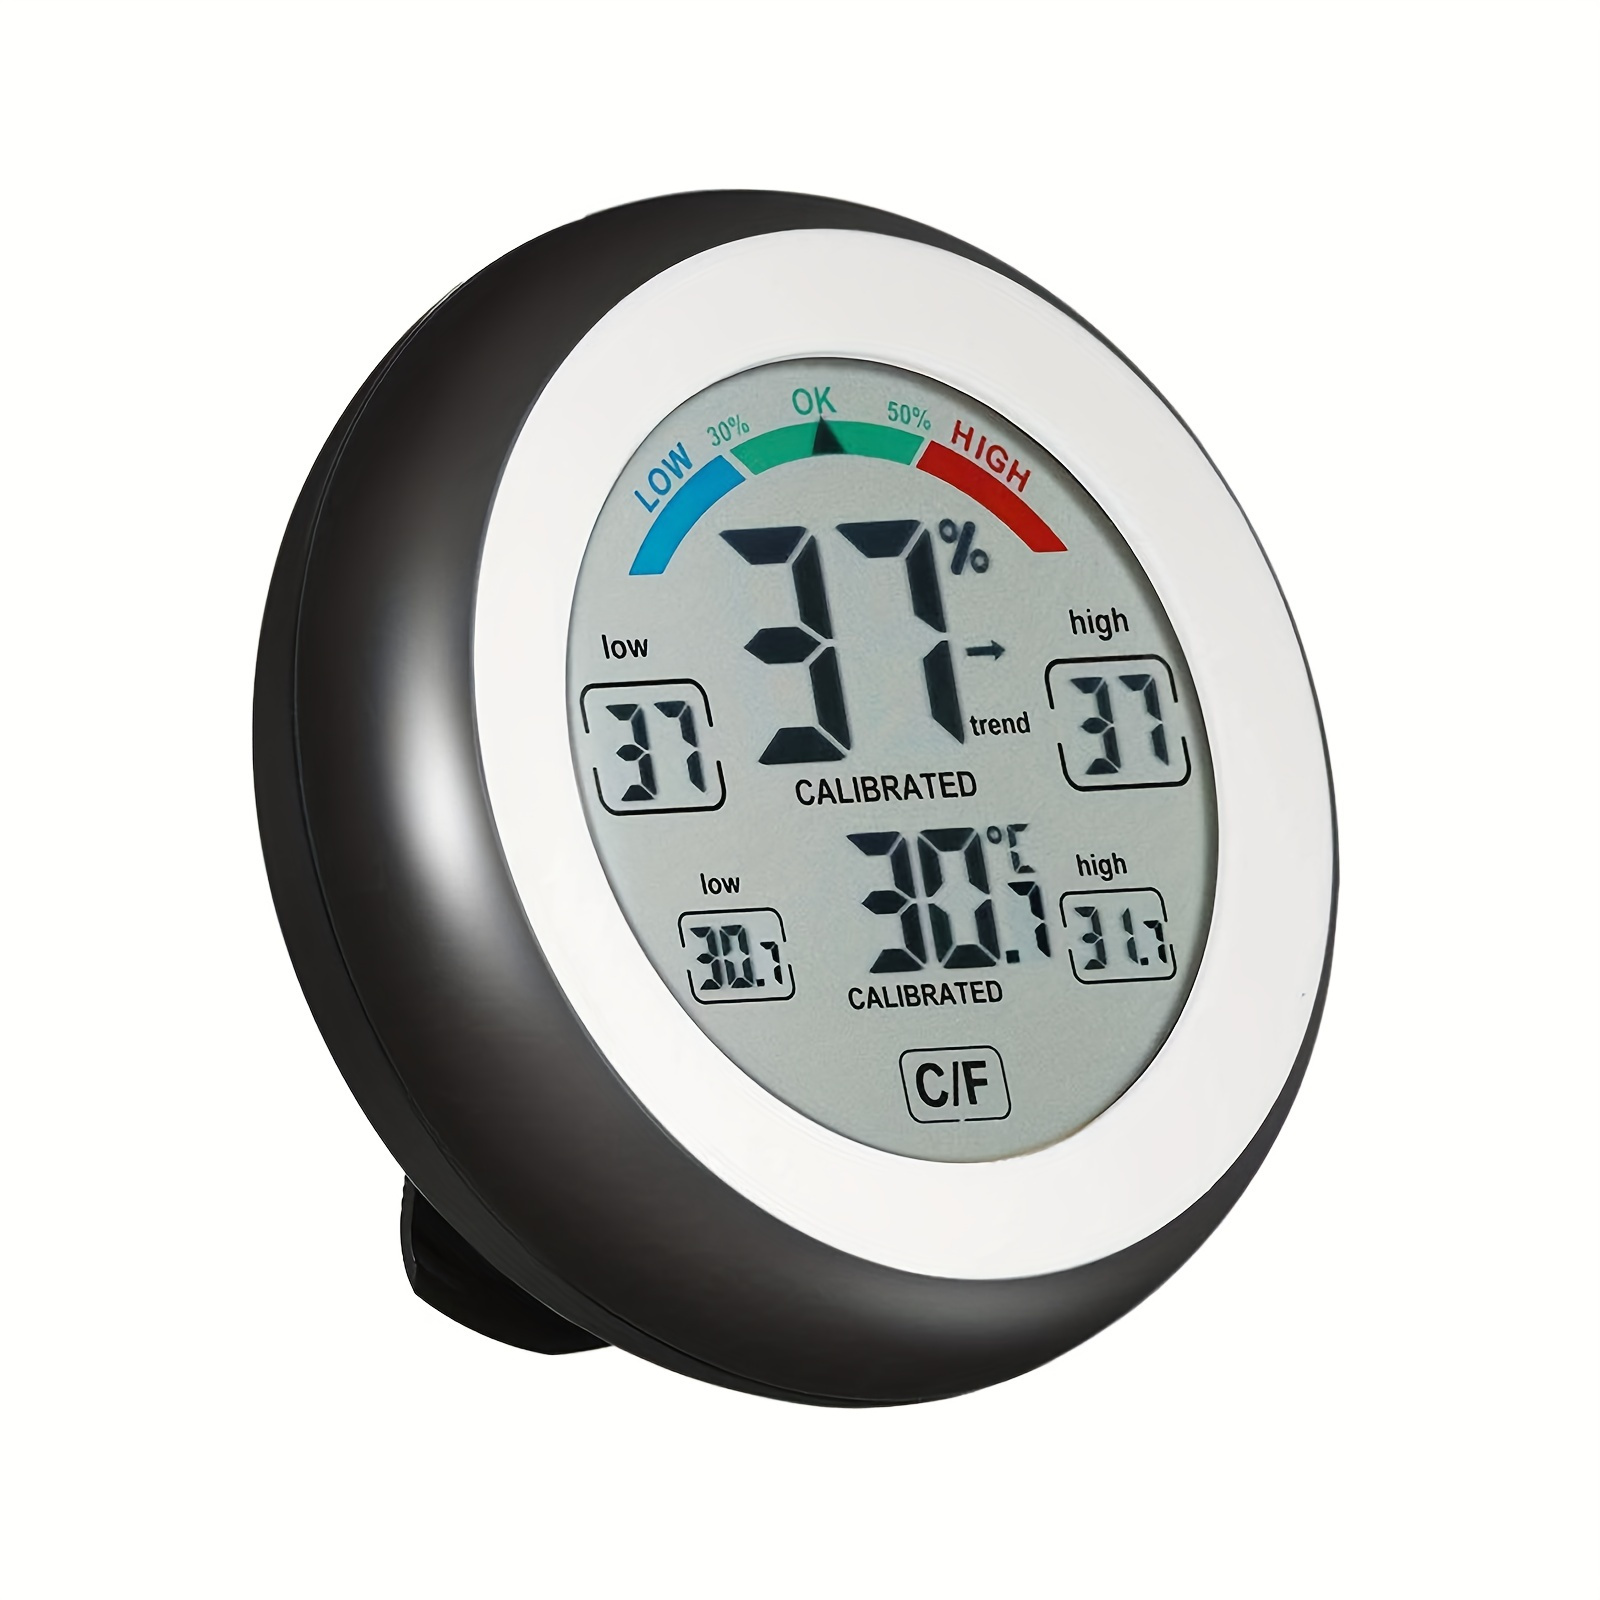 Temperature Humidity Gauge, Digital Thermometer Hygrometer High